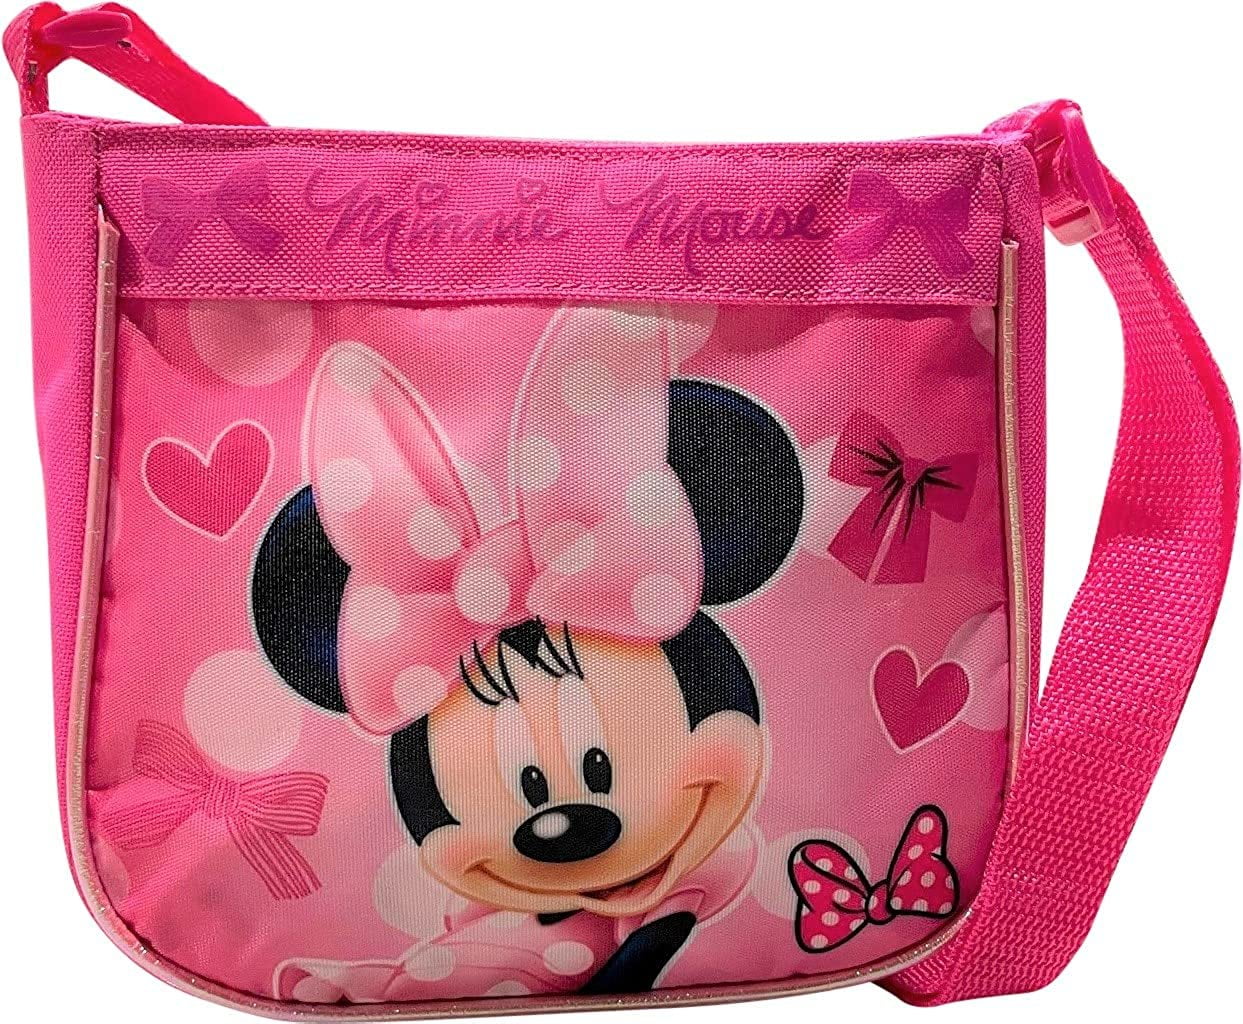 Dooney & Bourke crossbody purse with Mickey snd Minnie mouse valentine's  day - Women's handbags